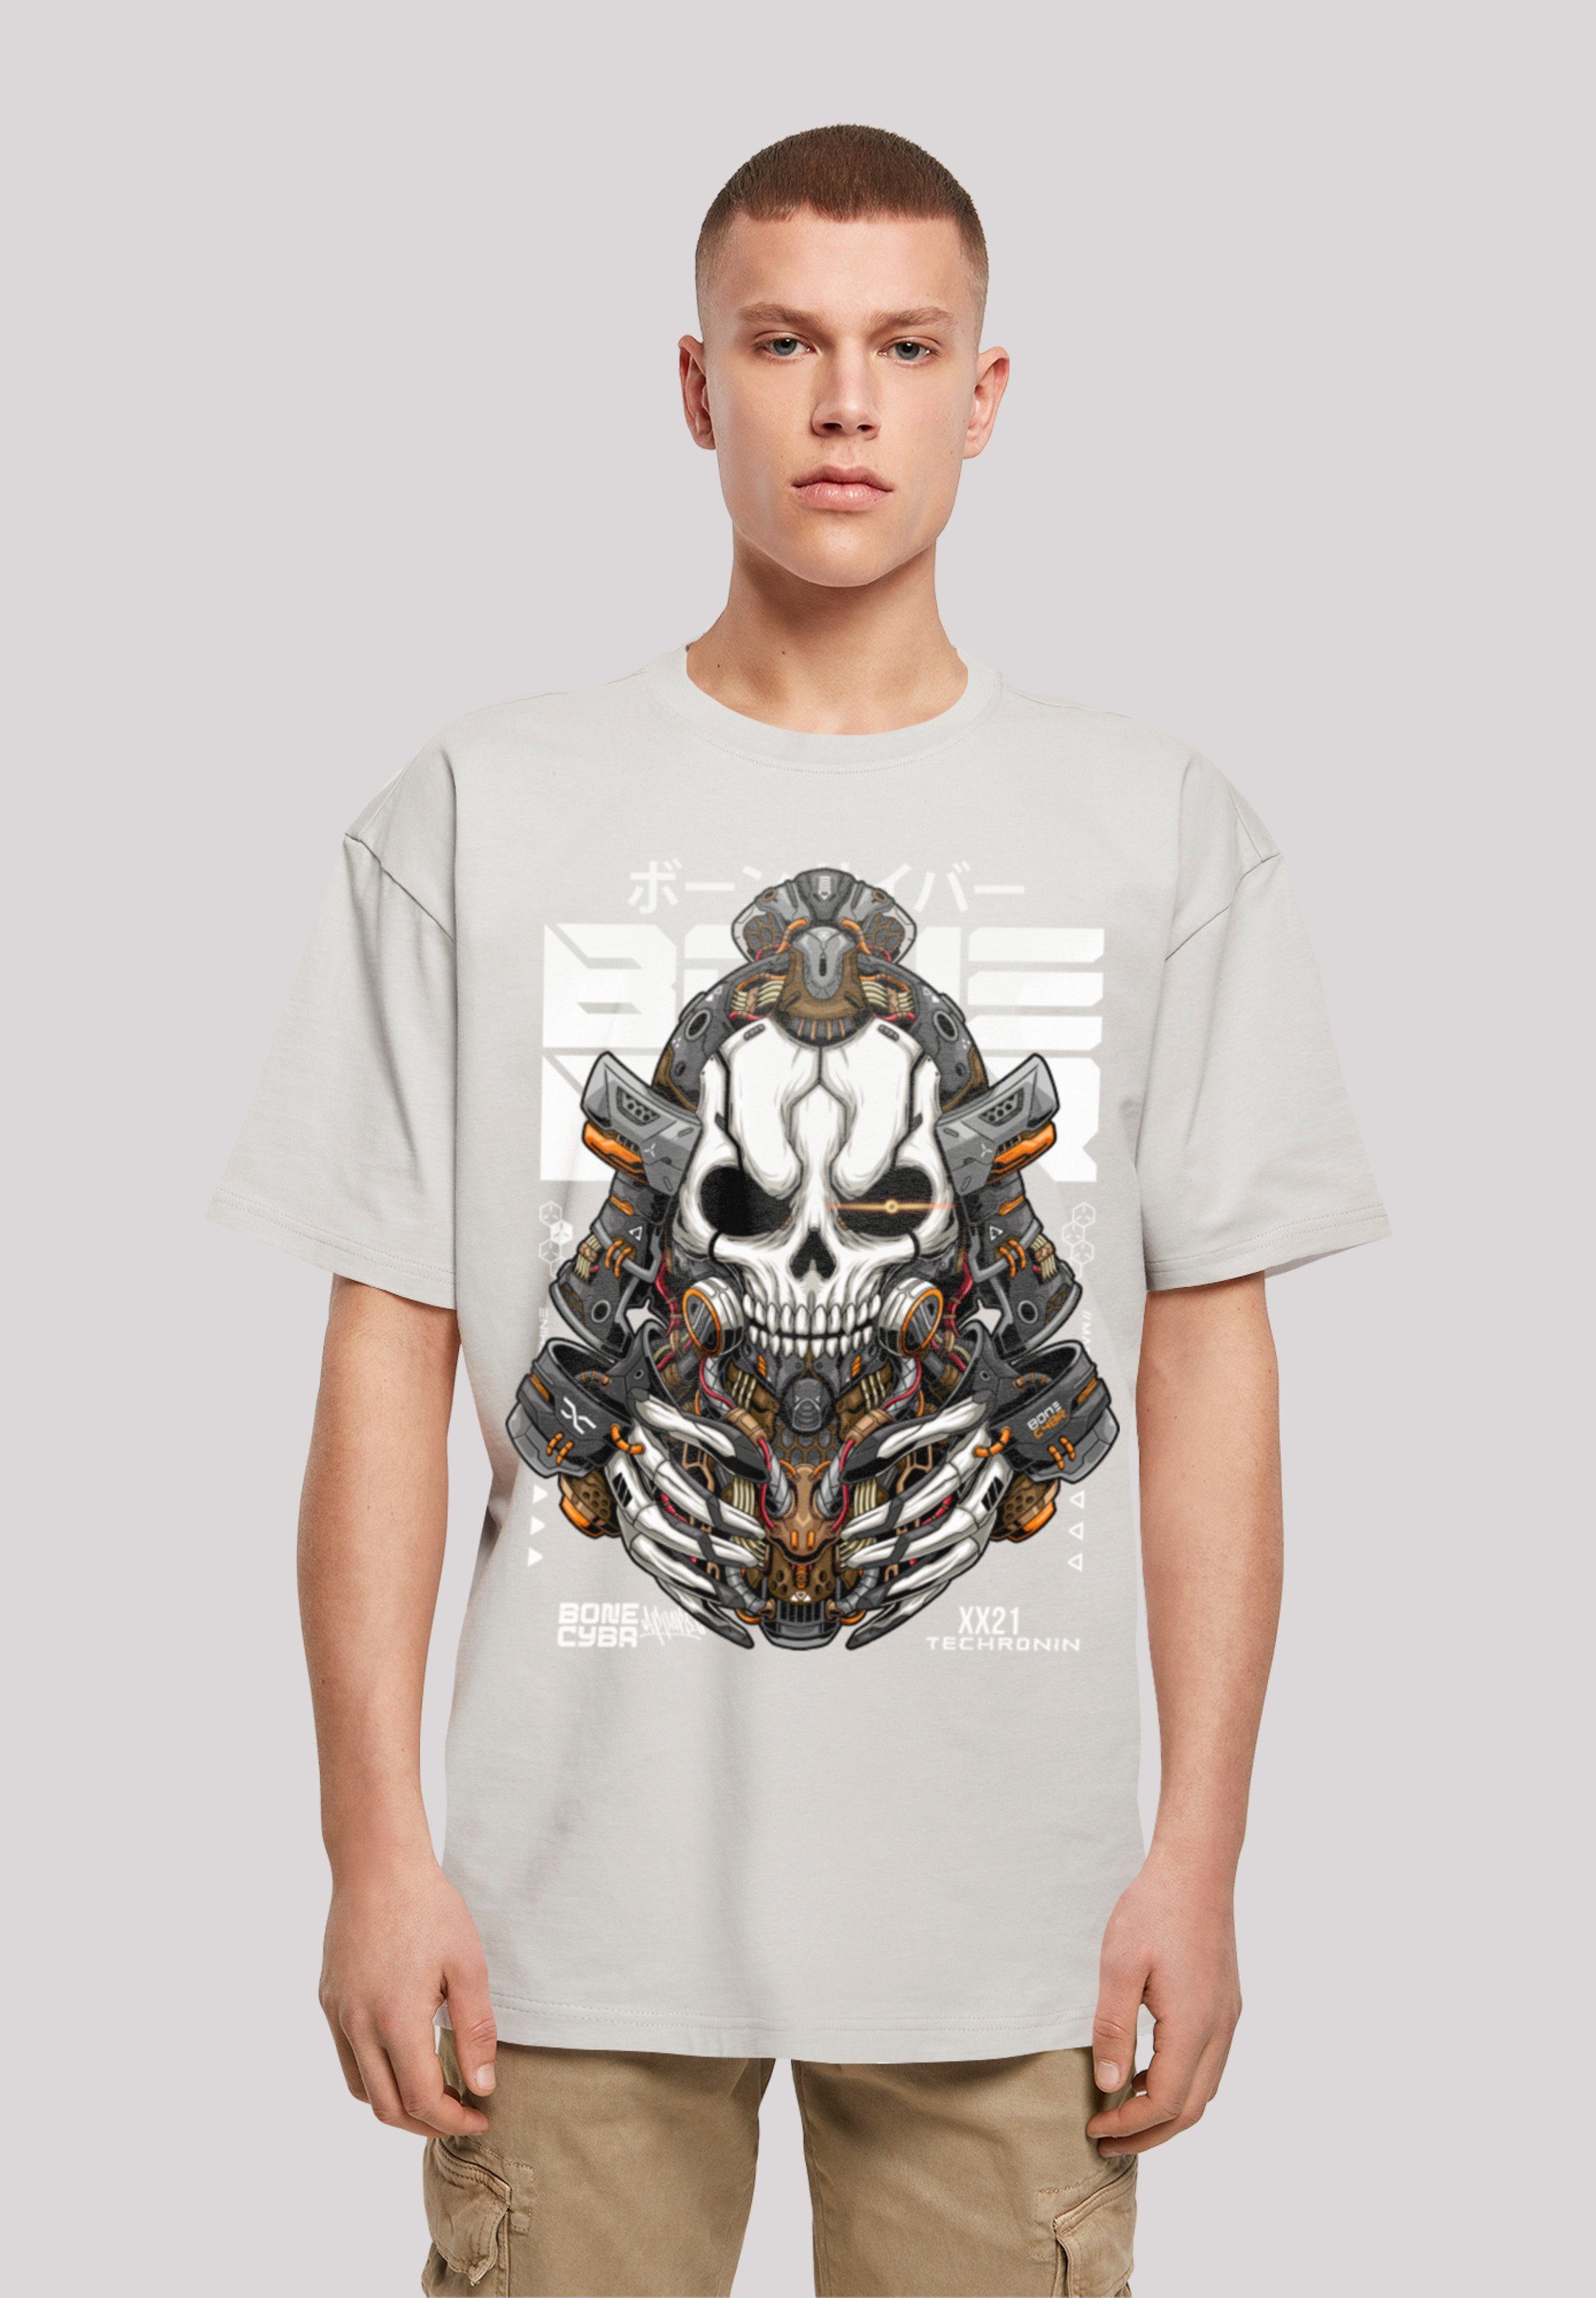 Bone STYLES Cyber F4NT4STIC T-Shirt Print Techronin CYBERPUNK